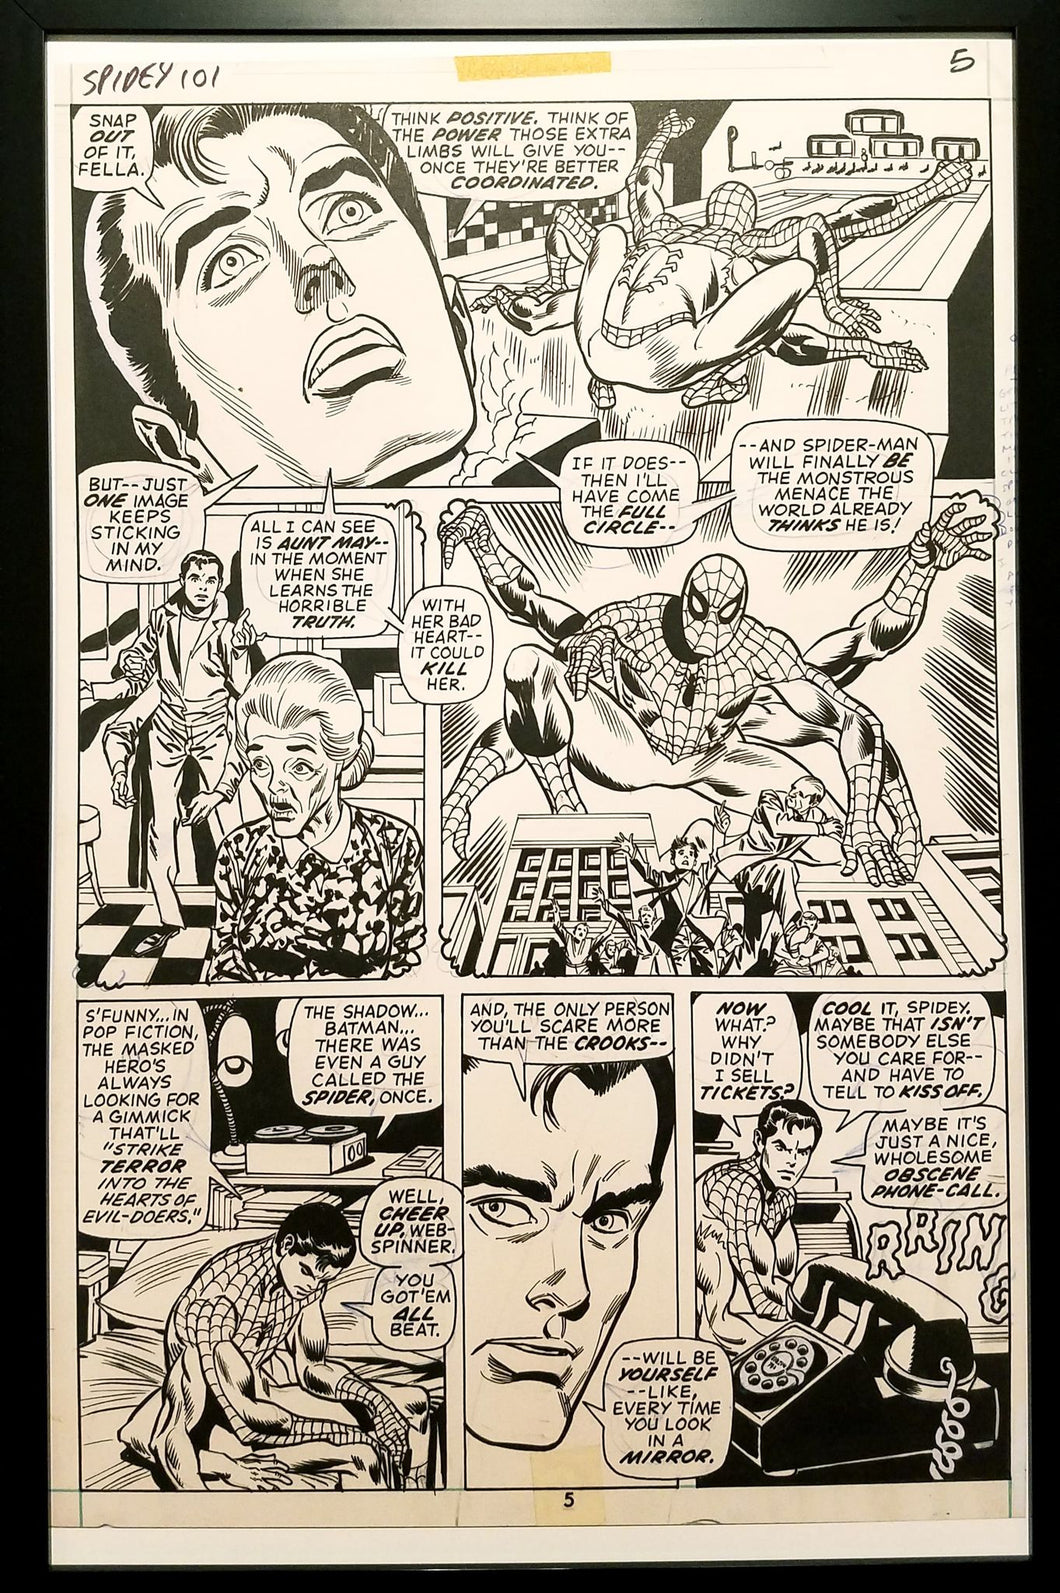 Amazing Spider-Man #101 pg. 5 Gil Kane 11x17 FRAMED Original Art Poster Marvel Comics